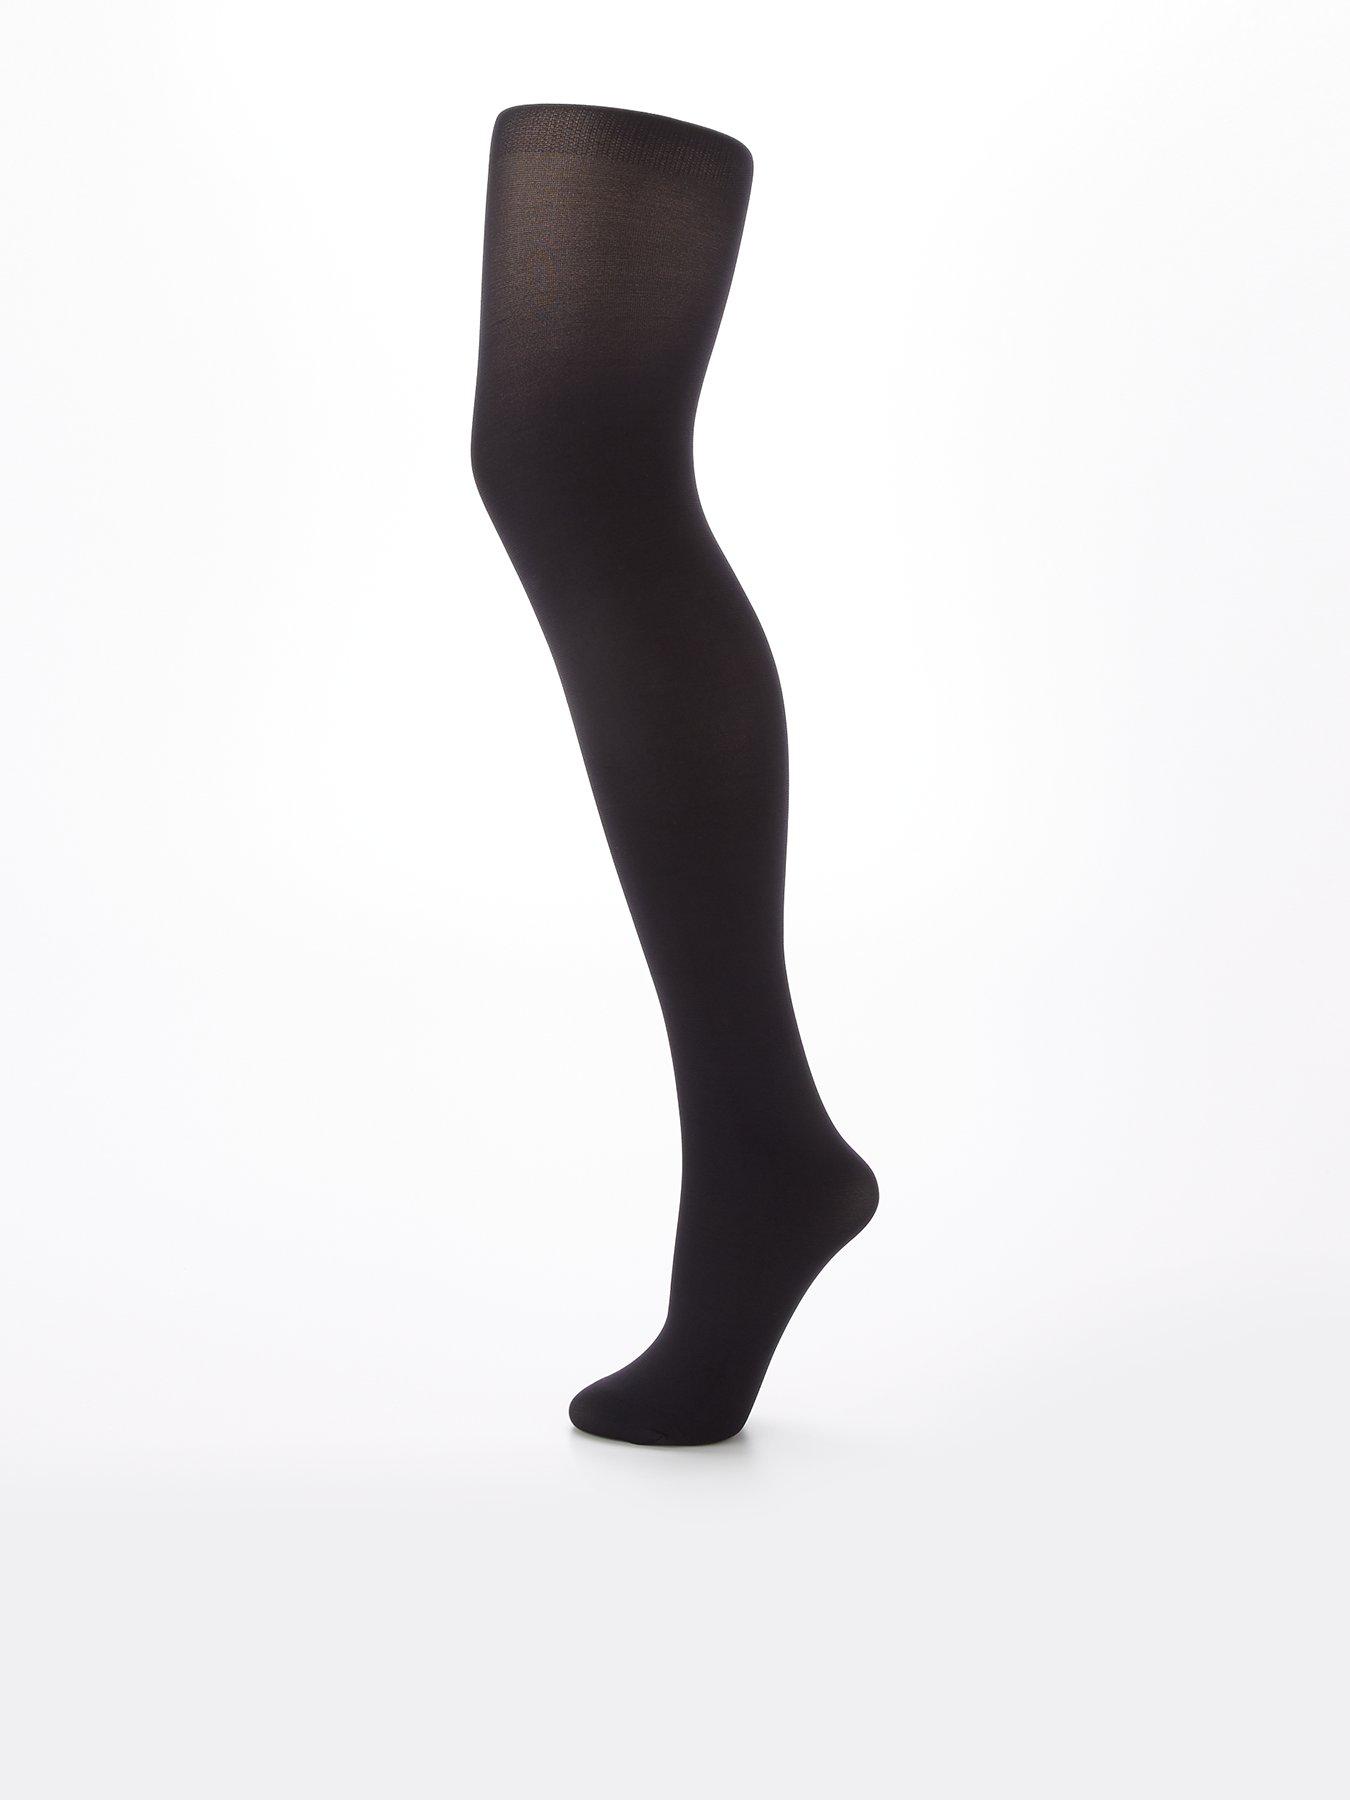 Tights 250 denier Opaque Women's Black stockings Sizes 8 10 12 14 16 